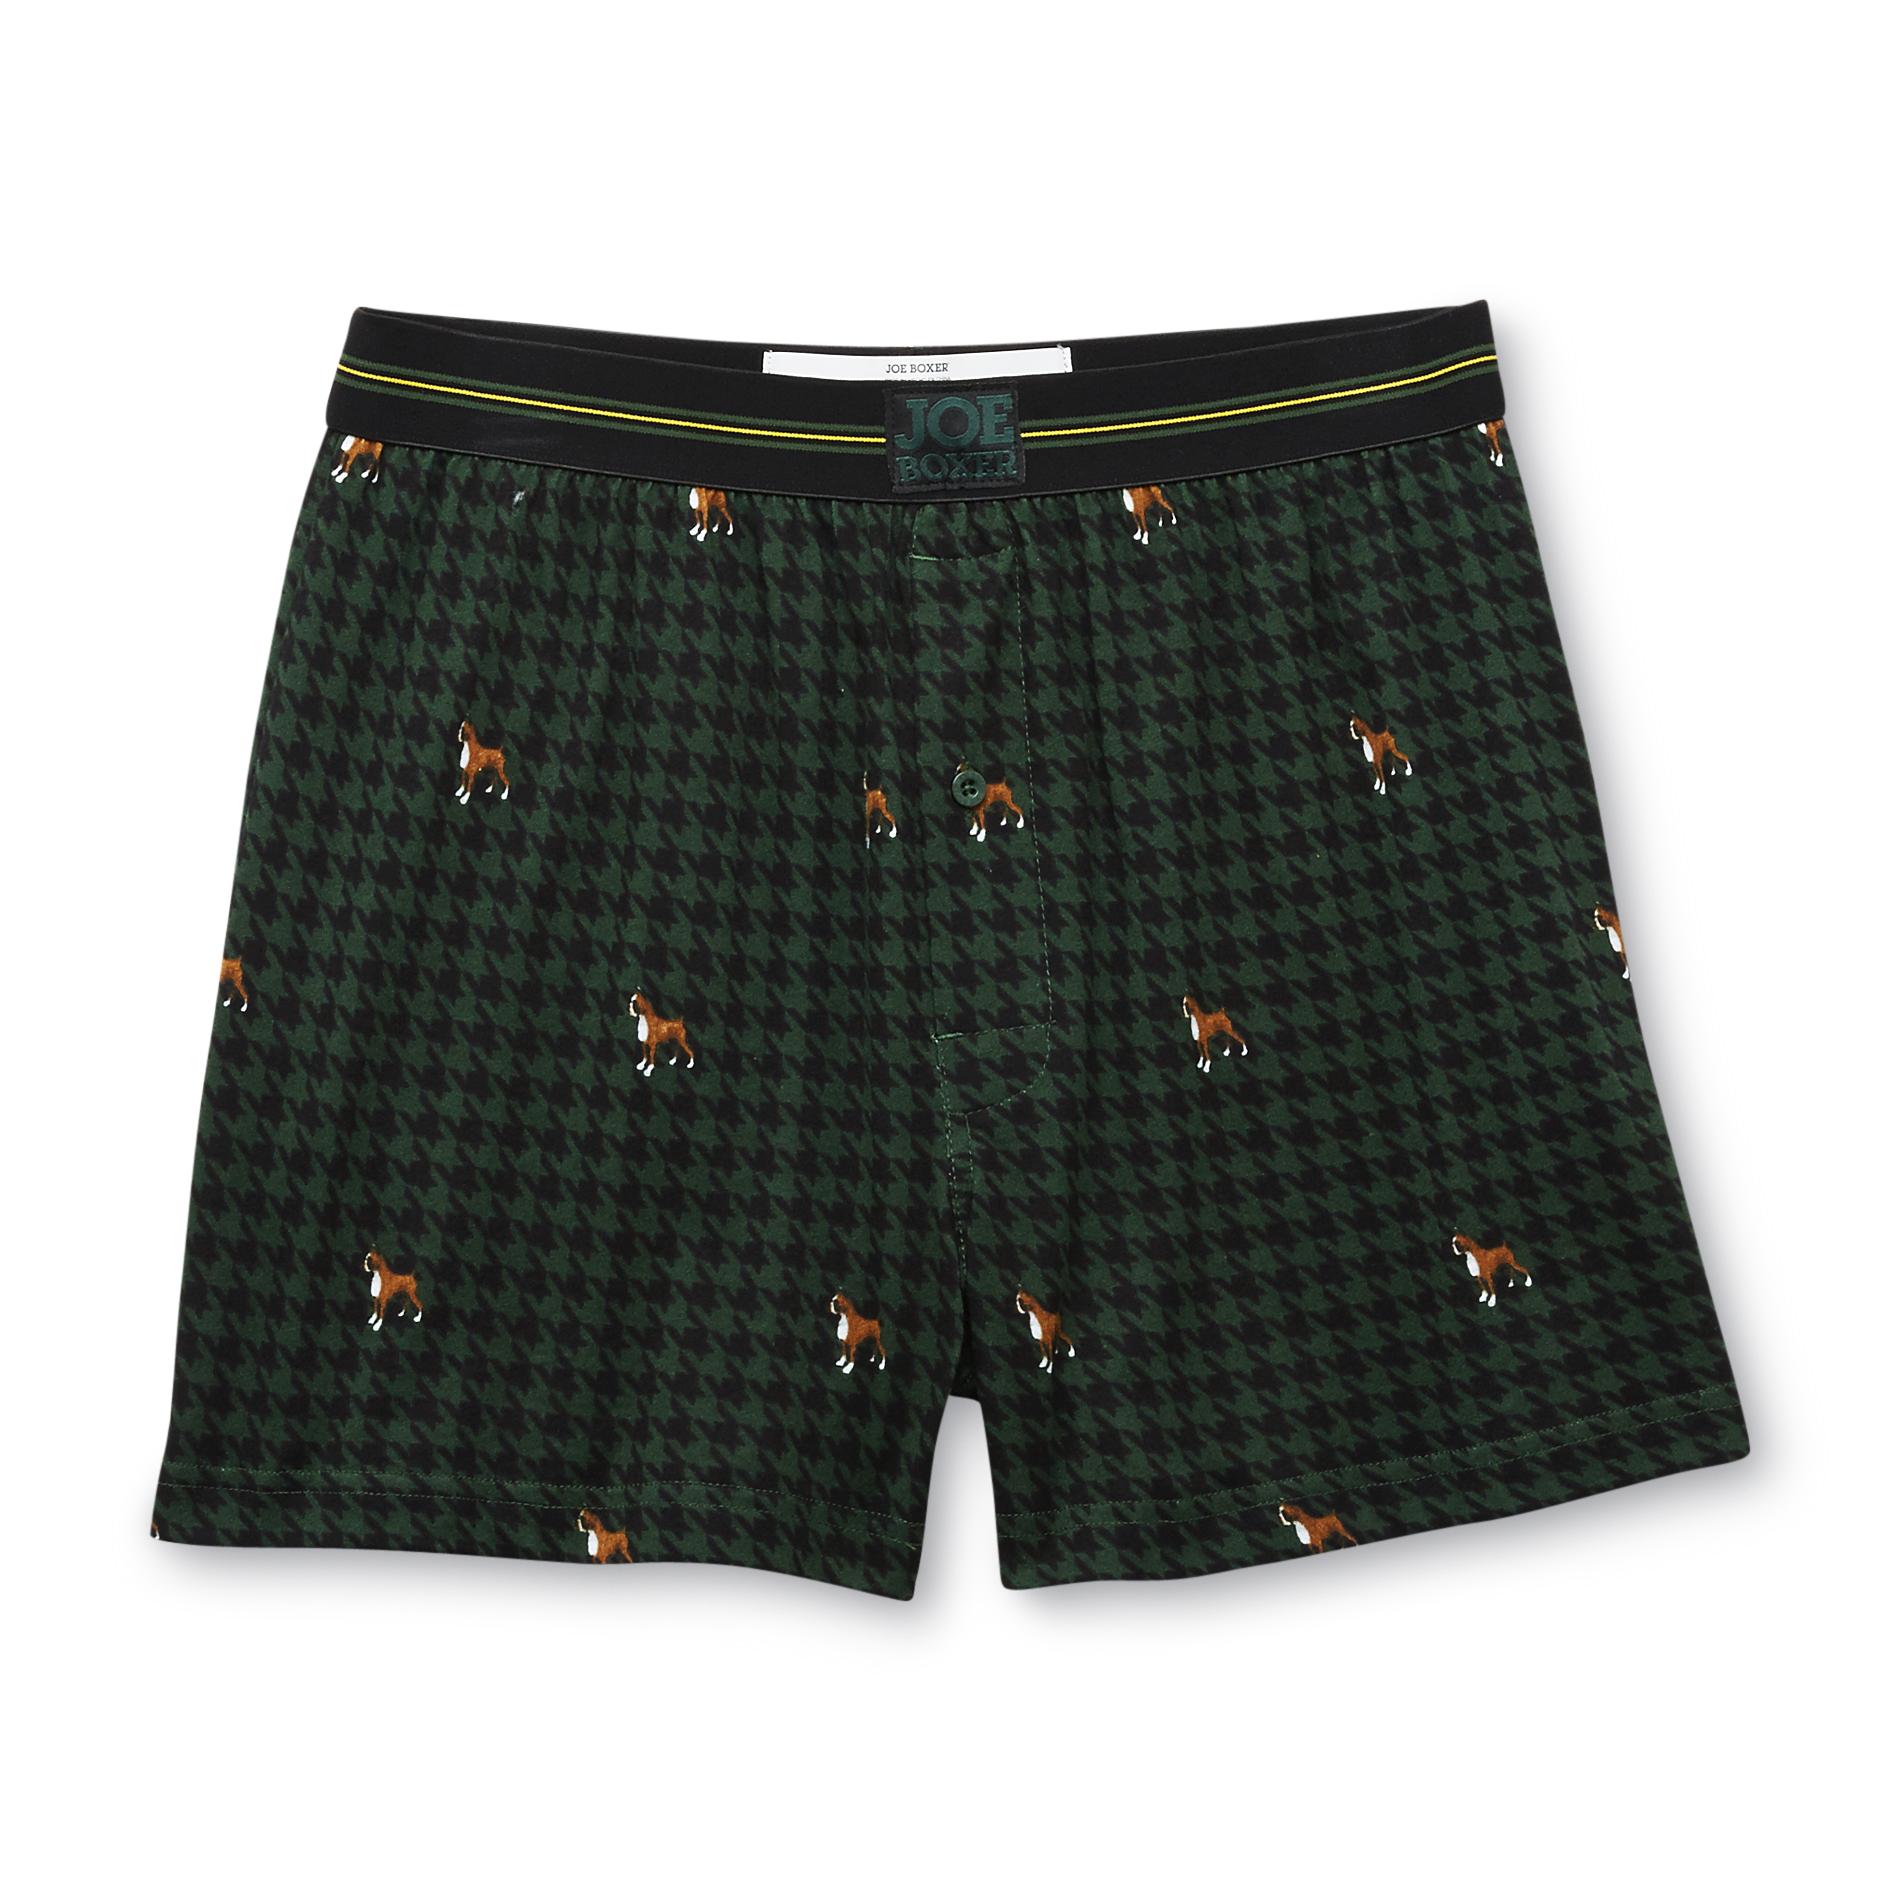 Joe Boxer Men's Boxer Shorts - Dogs & Houndstooth Check